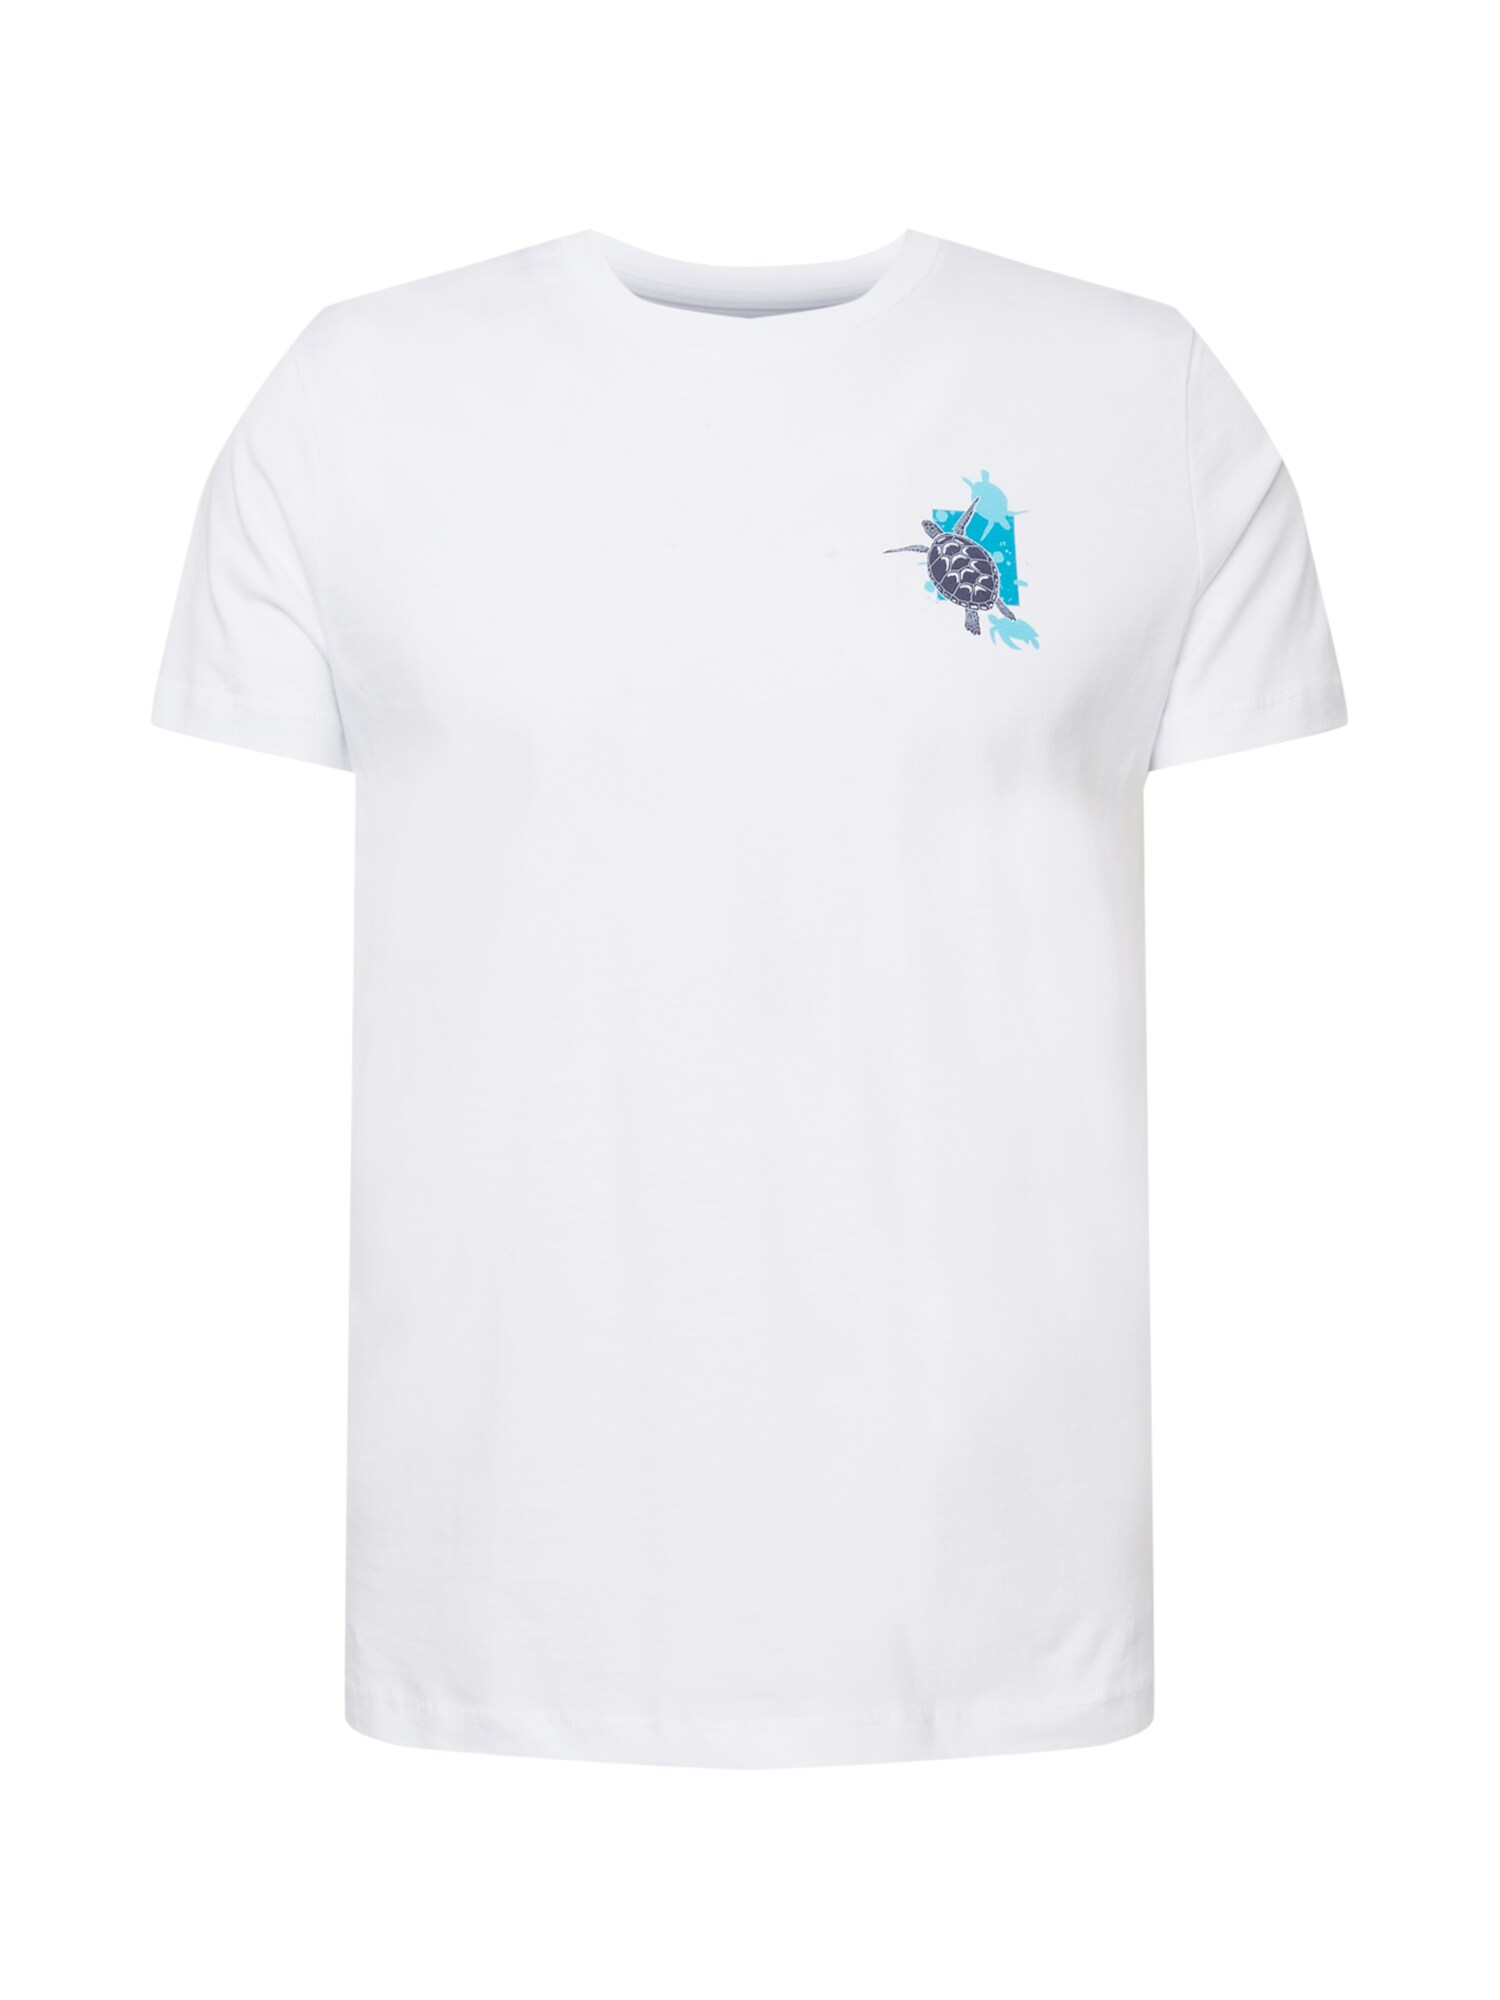 WESTMARK LONDON Marškinėliai 'SEA TURTLE' balta / vandens spalva / tamsiai mėlyna